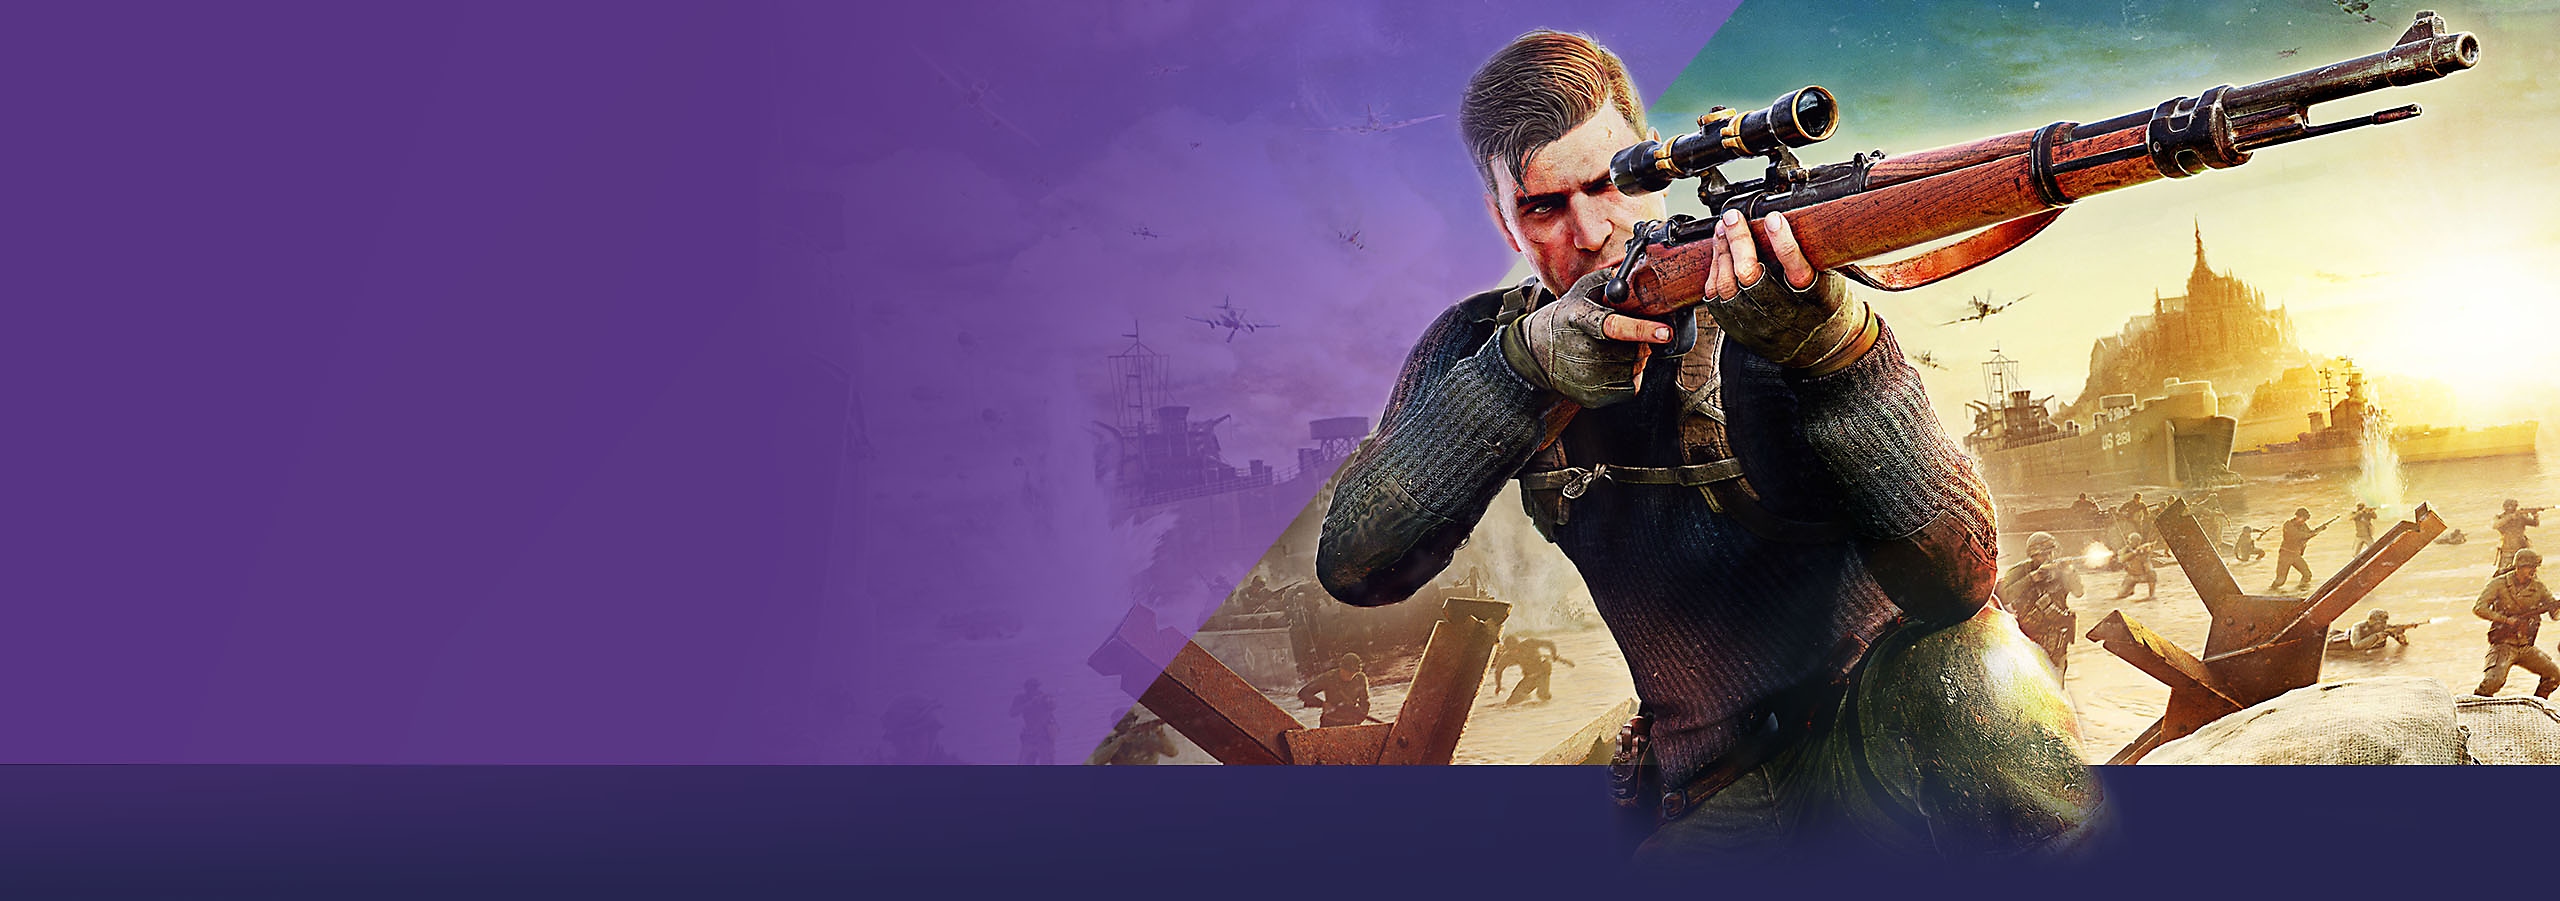 Цього місяця на PlayStation – зображення героя з ілюстрацією зі Sniper Elite 5